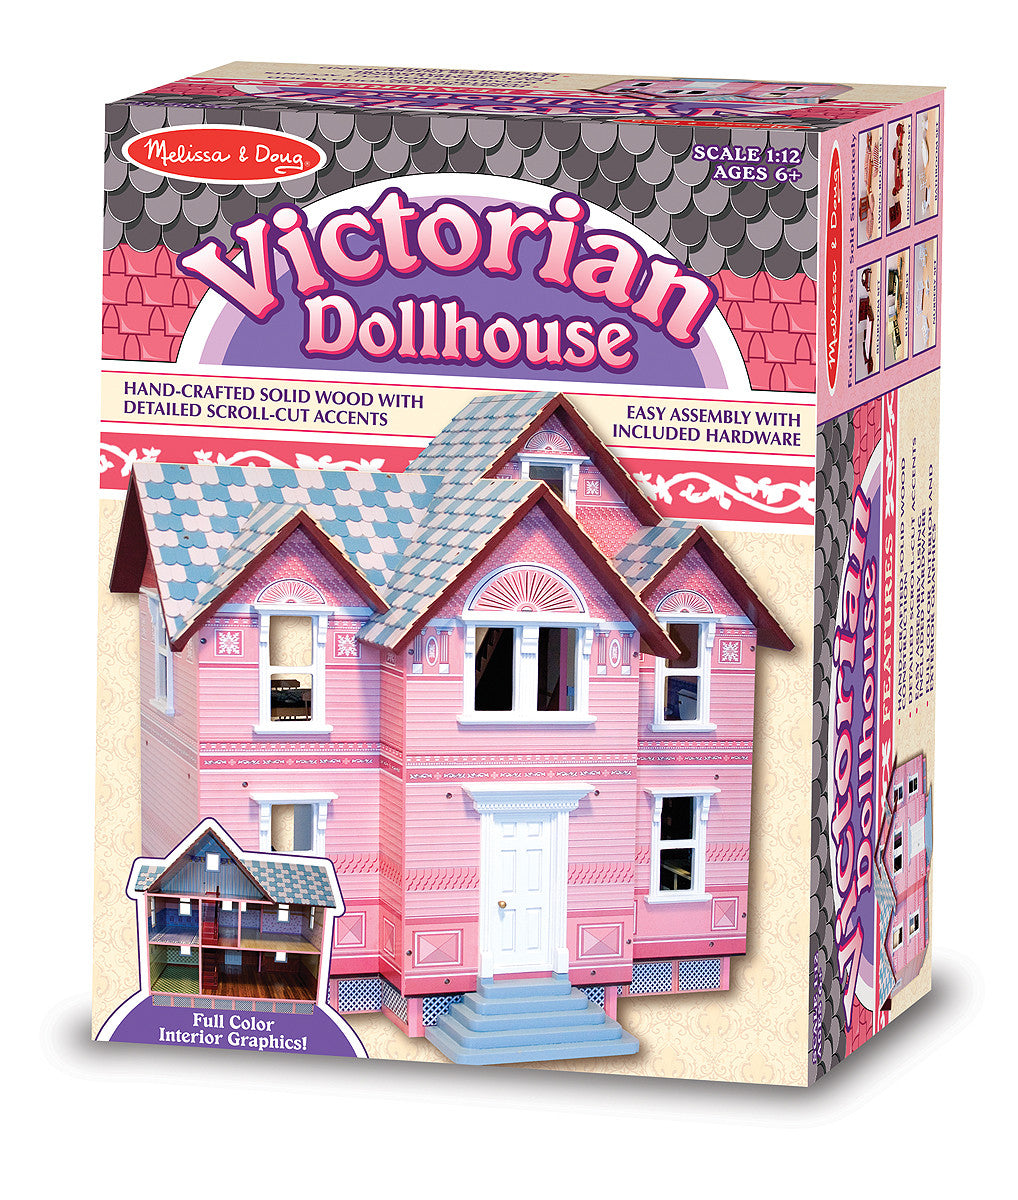 Melissa & Doug Victorian Dollhouse 2580